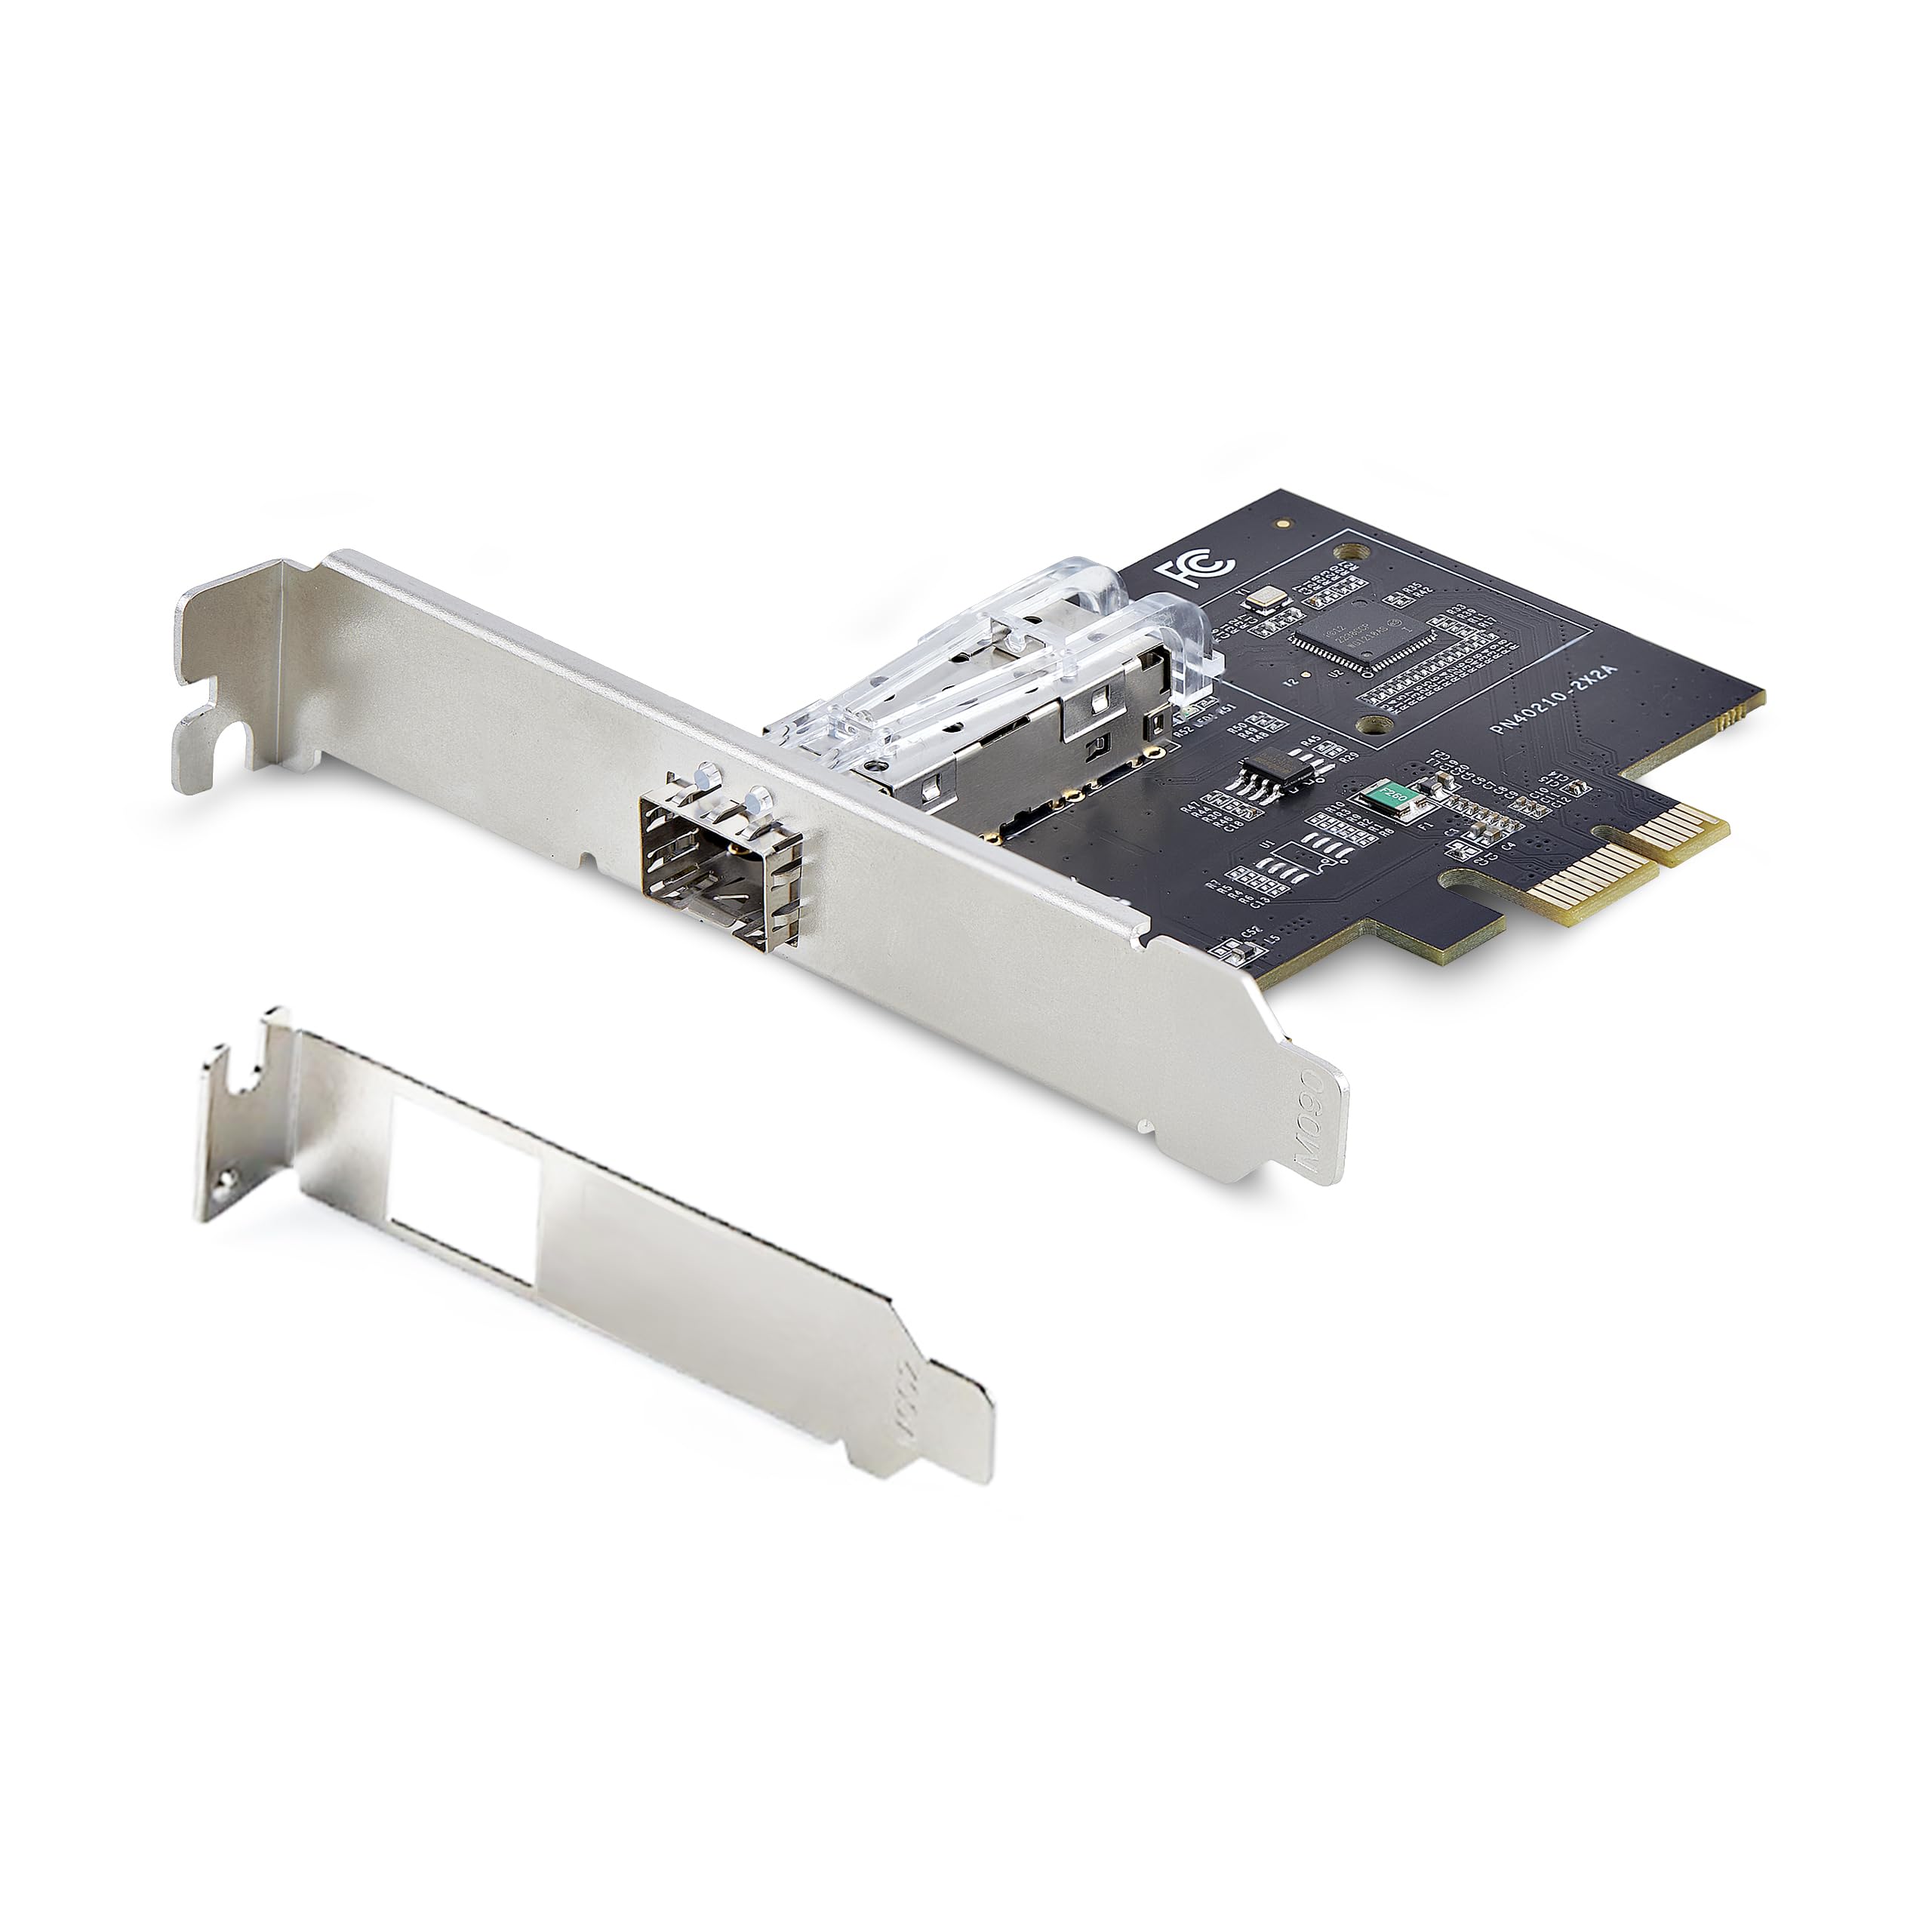 StarTech.com 1-Port GbE SFP Network Card, PCIe 2.1 x1, Intel I210-IS, 1GbE Controller, 1000BASE Copper/Fiber Optic, Single-Port Gigabit Ethernet NIC, Desktop/Server Backplanes (P011GI-NETWORK-CARD)